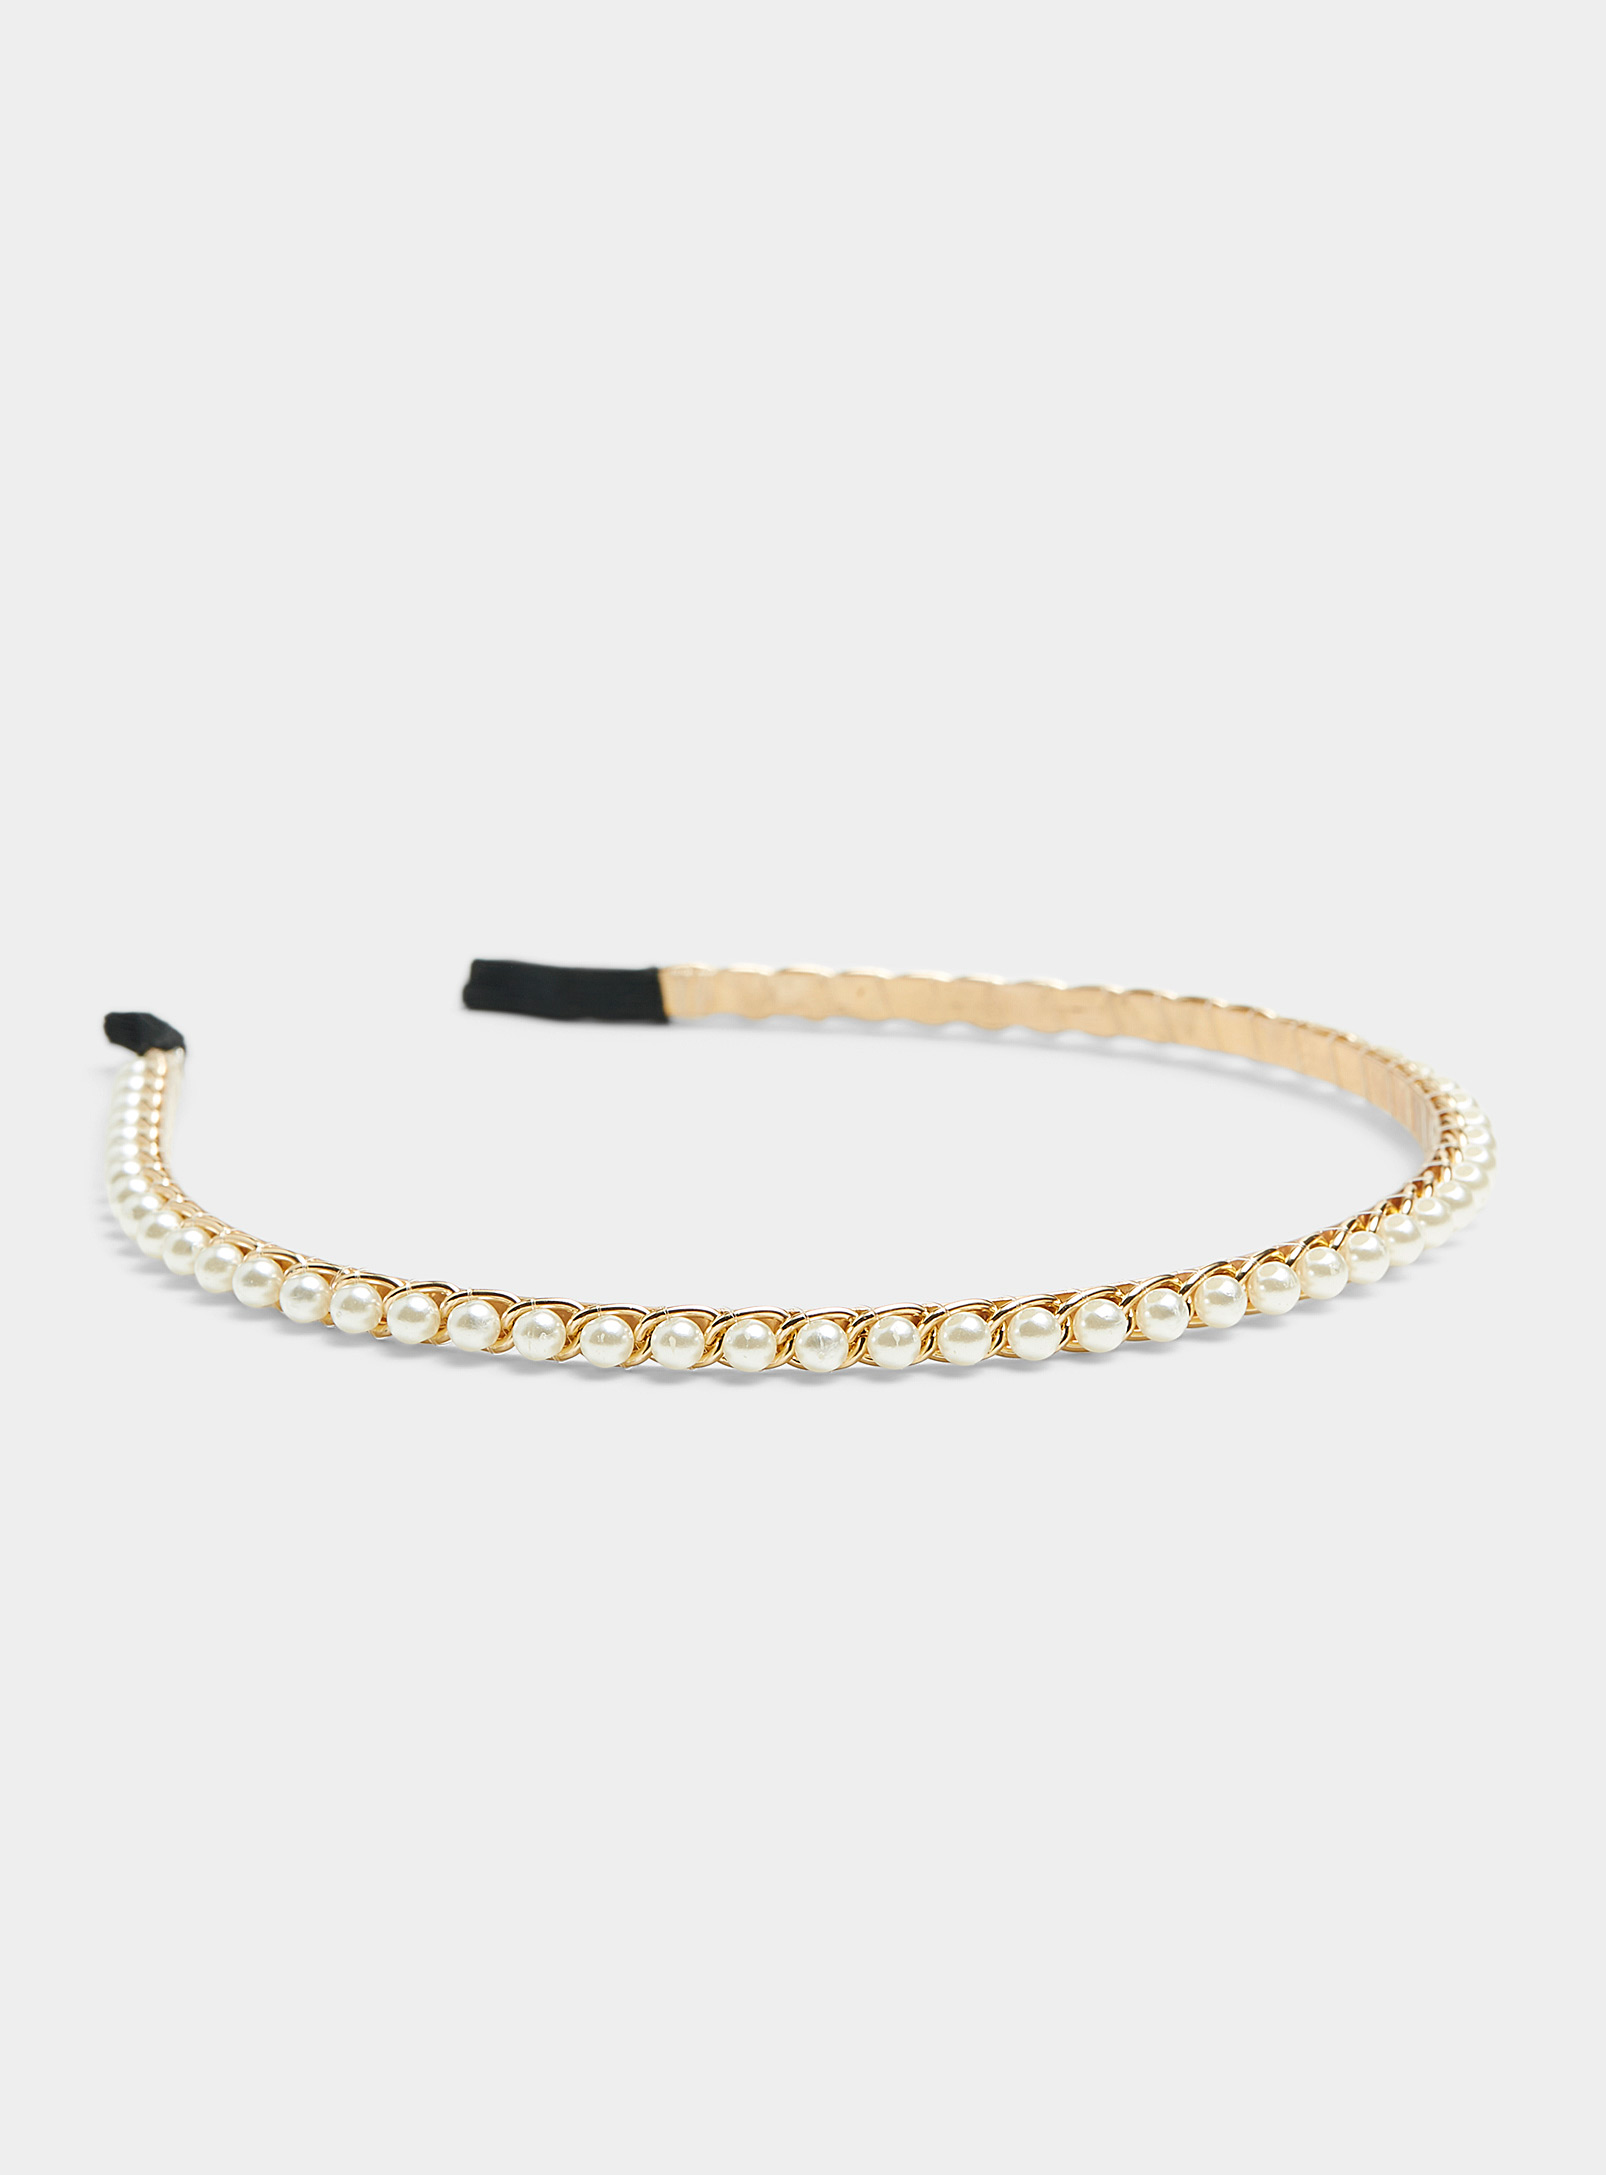 Simons - Women's Pearly beads golden headband